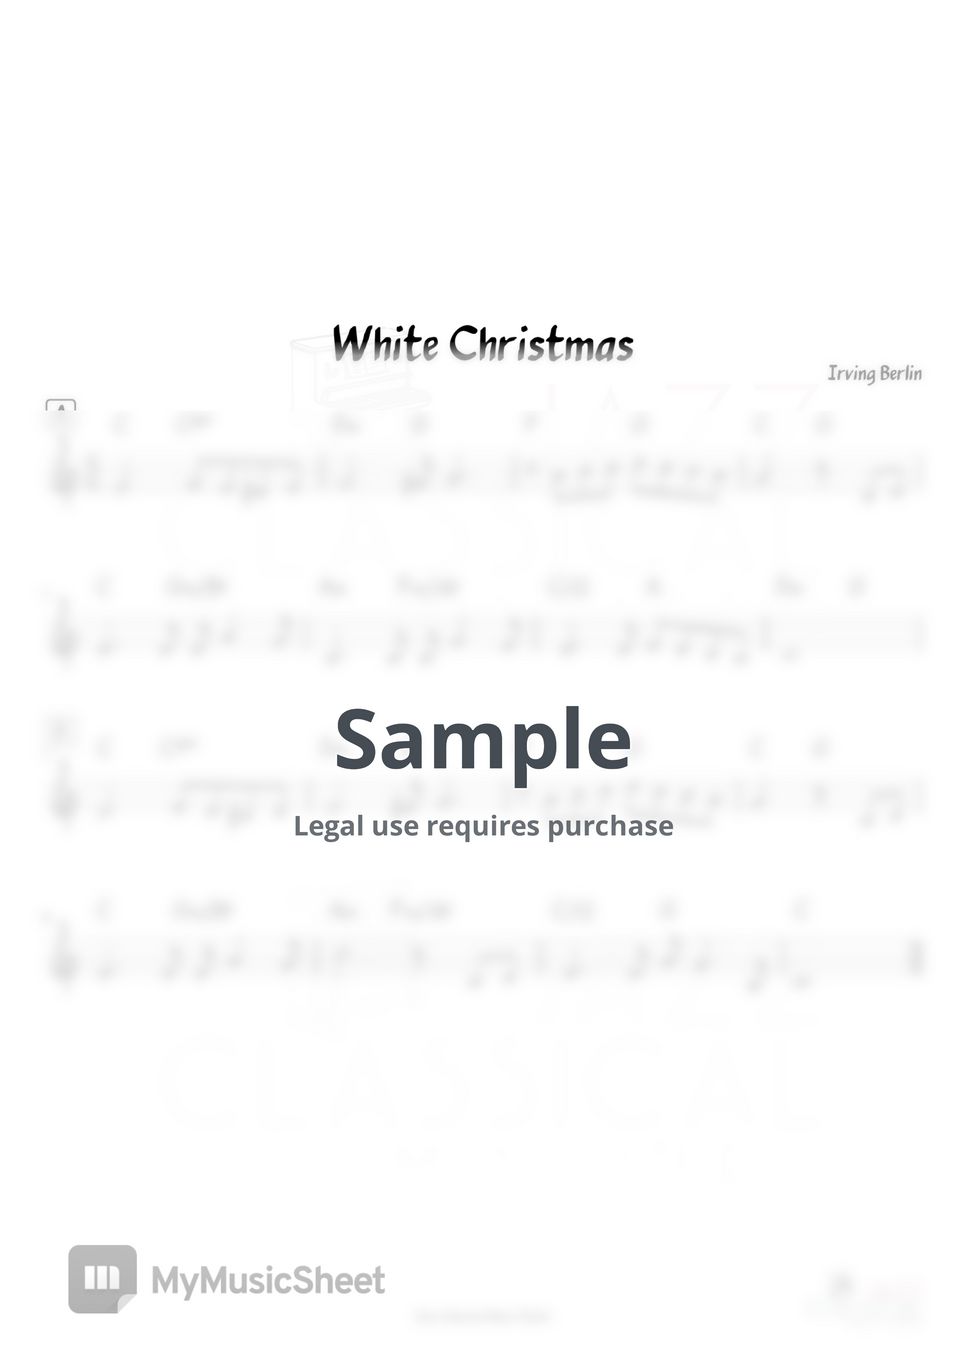 Irving Berlin - White Christmas by Jazz Classical Music Studio